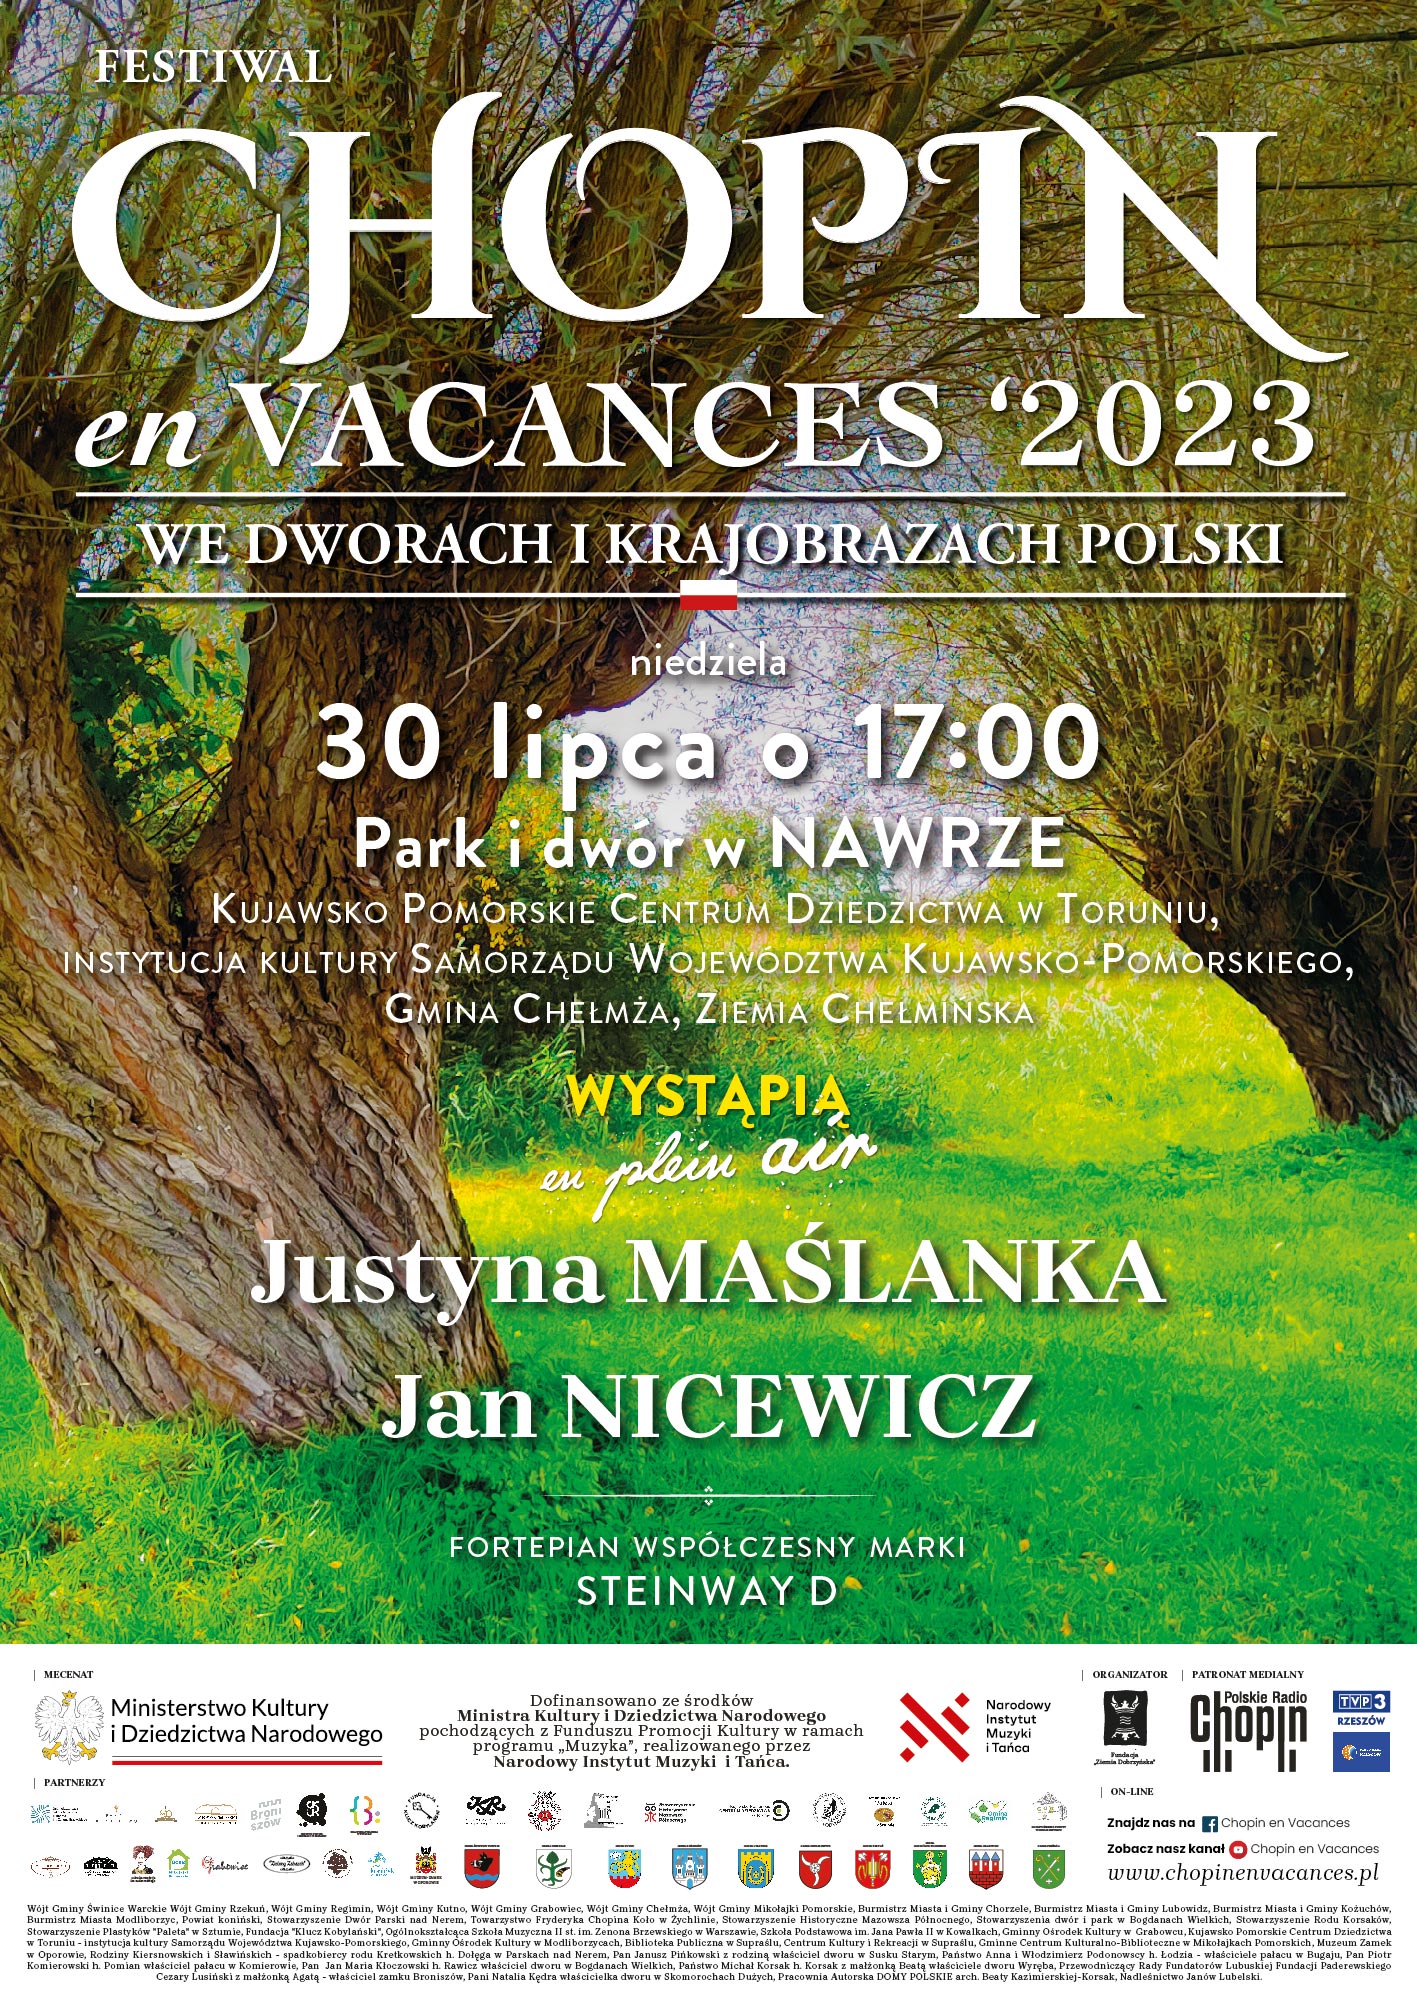 Koncert z cyklu CHOPIN en VACANCES we dworach i krajobrazach Polski